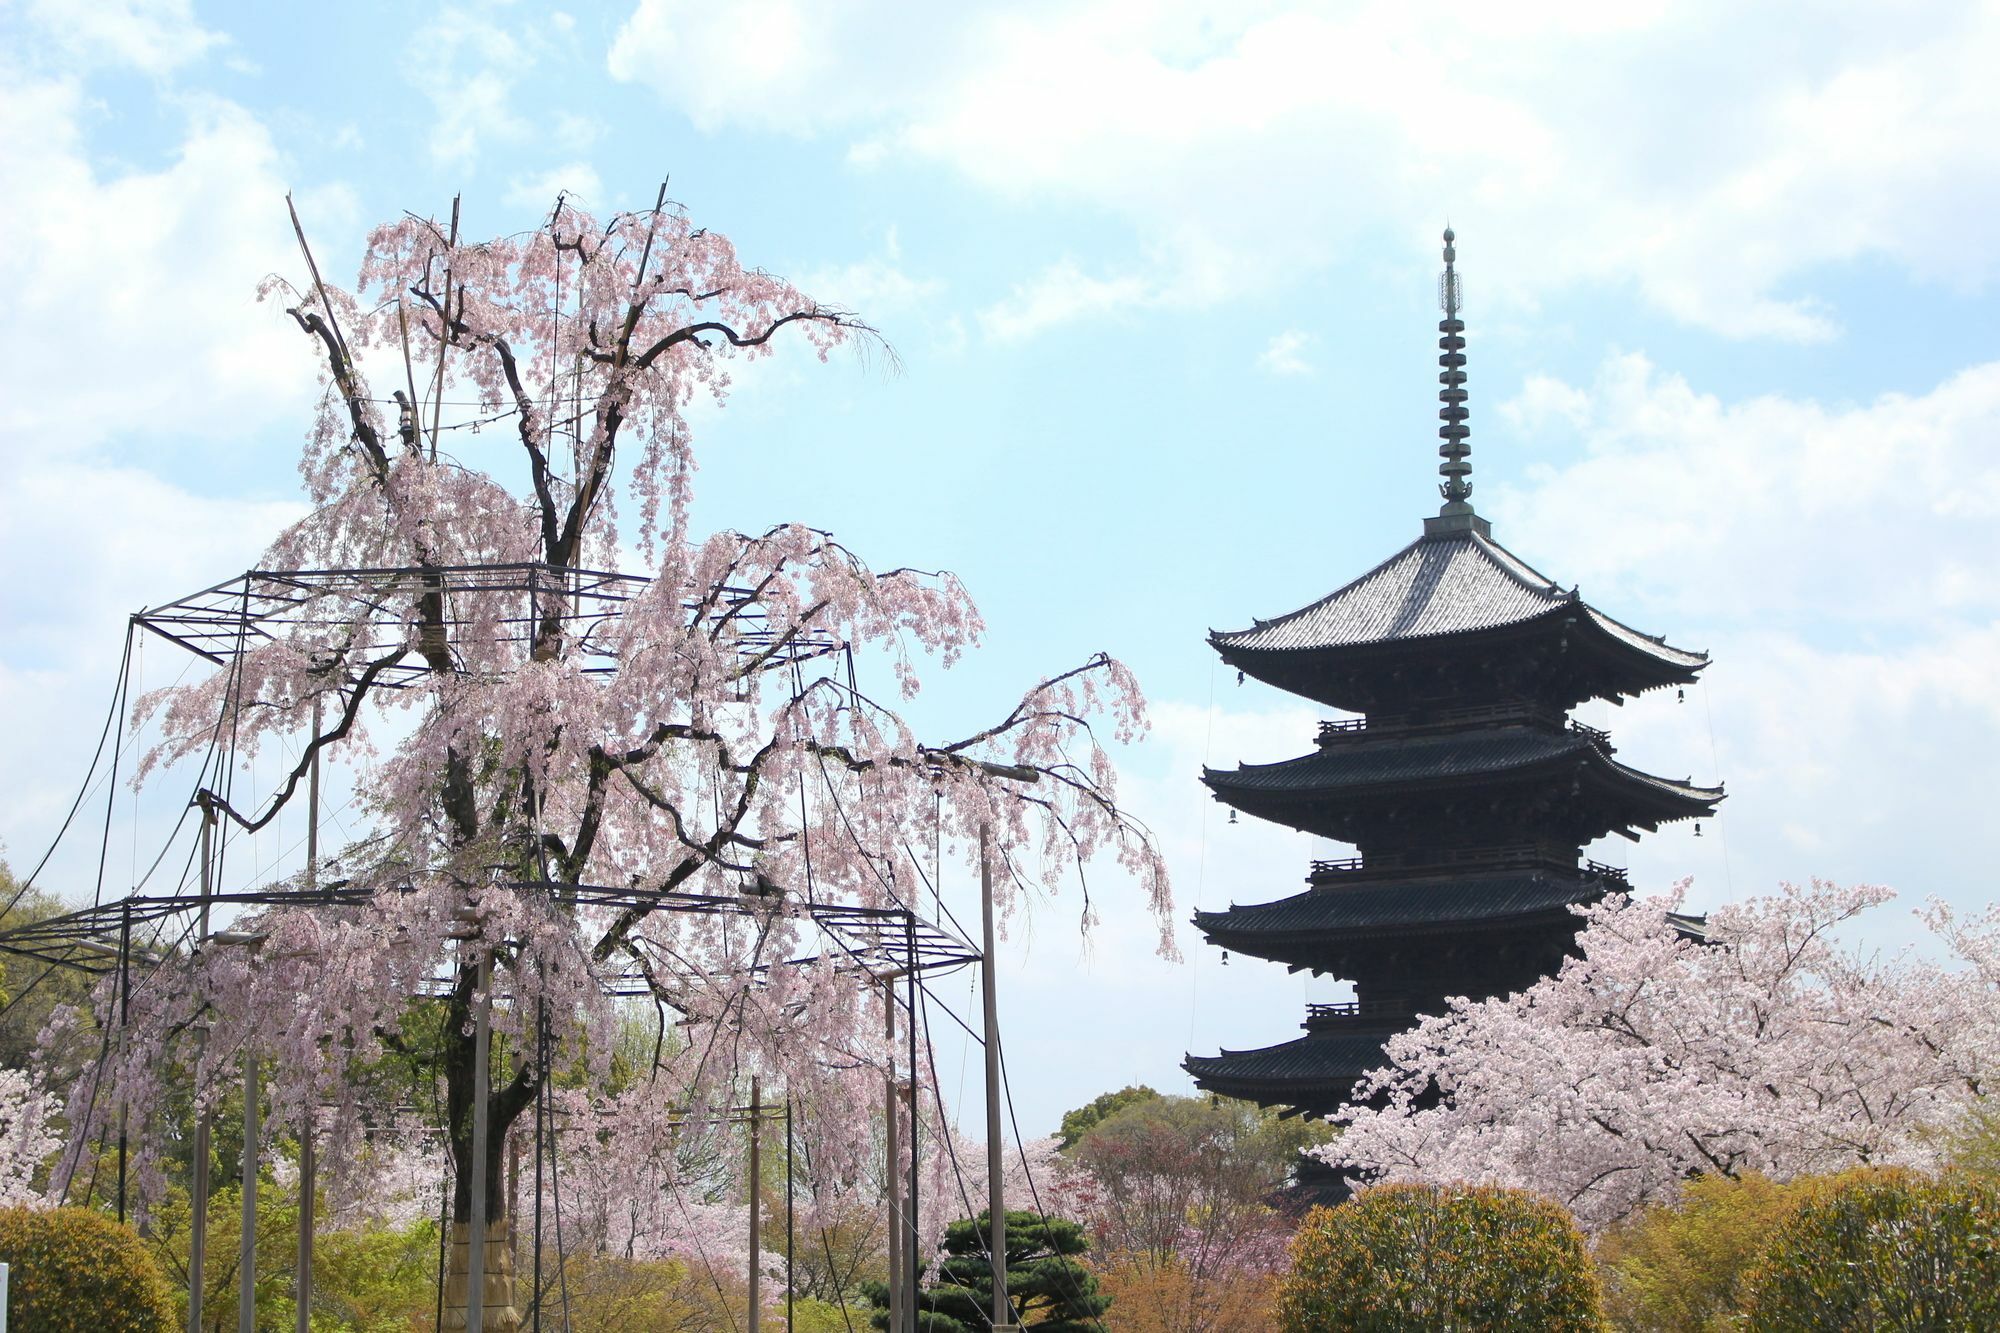 Stay Sakura Kyoto Toji West II 外观 照片